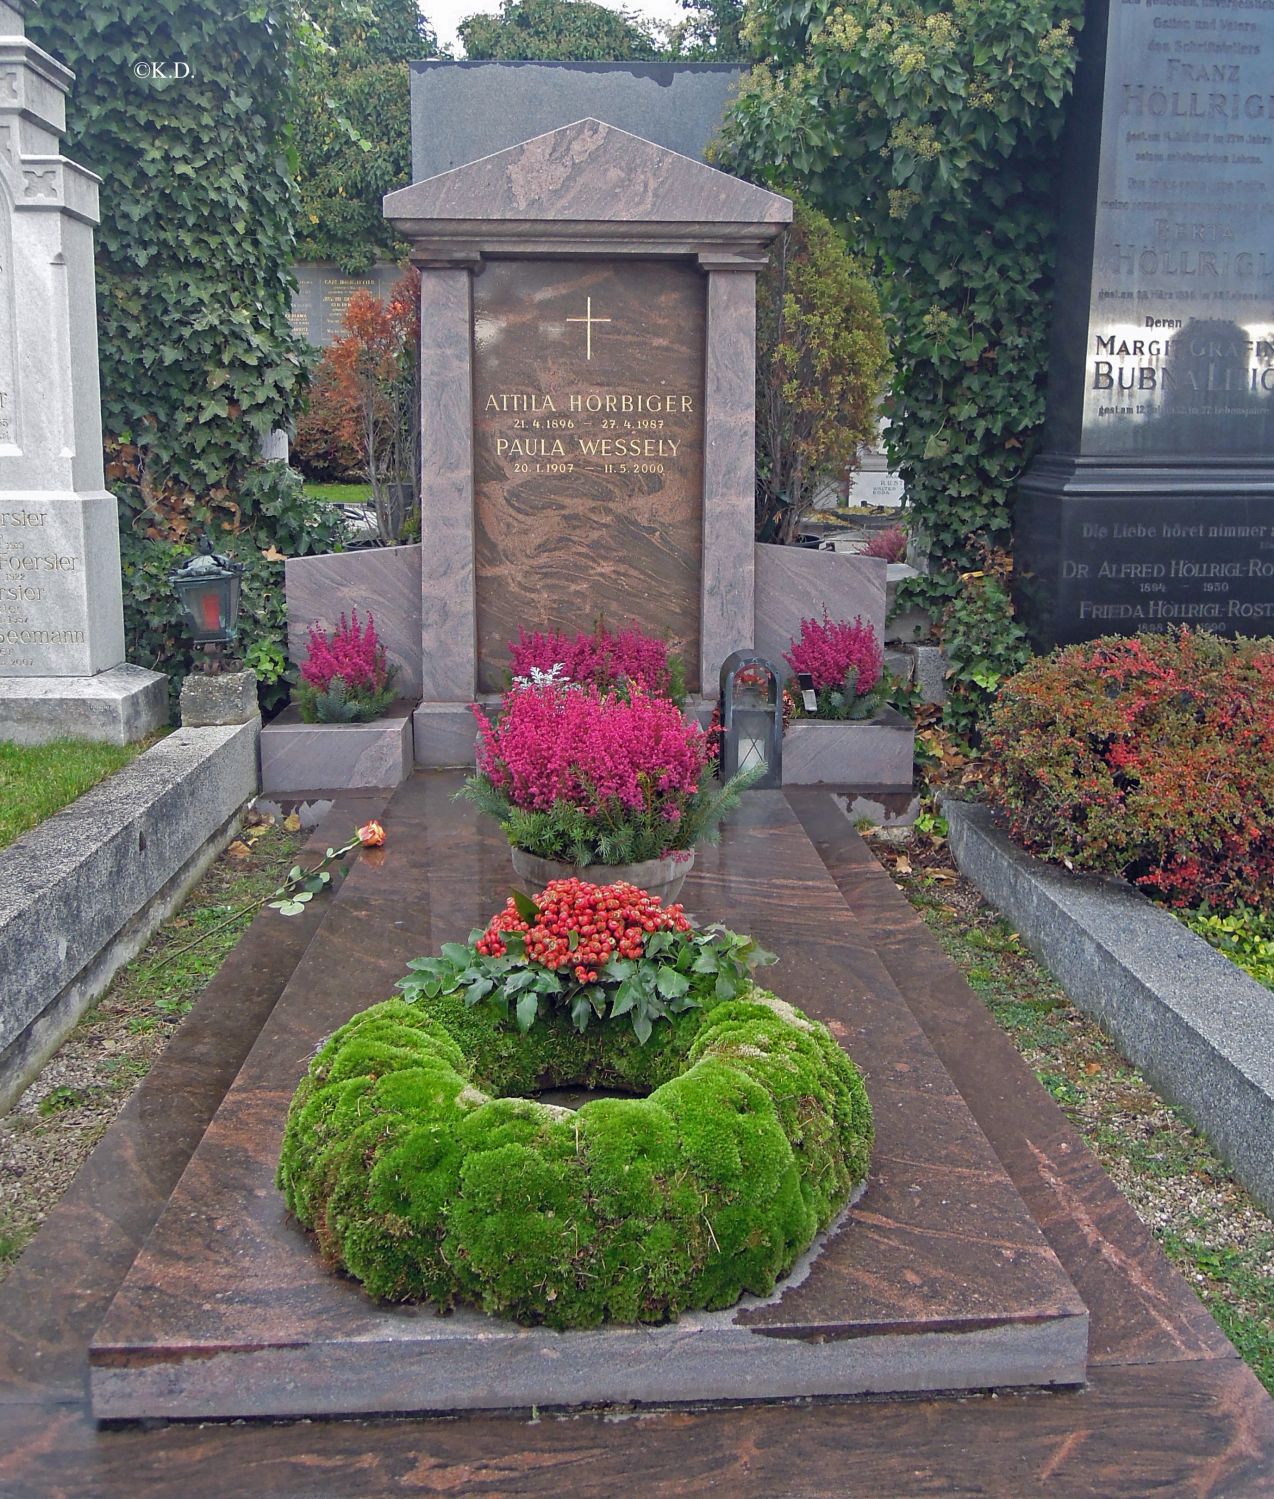 Grinzinger Friedhof